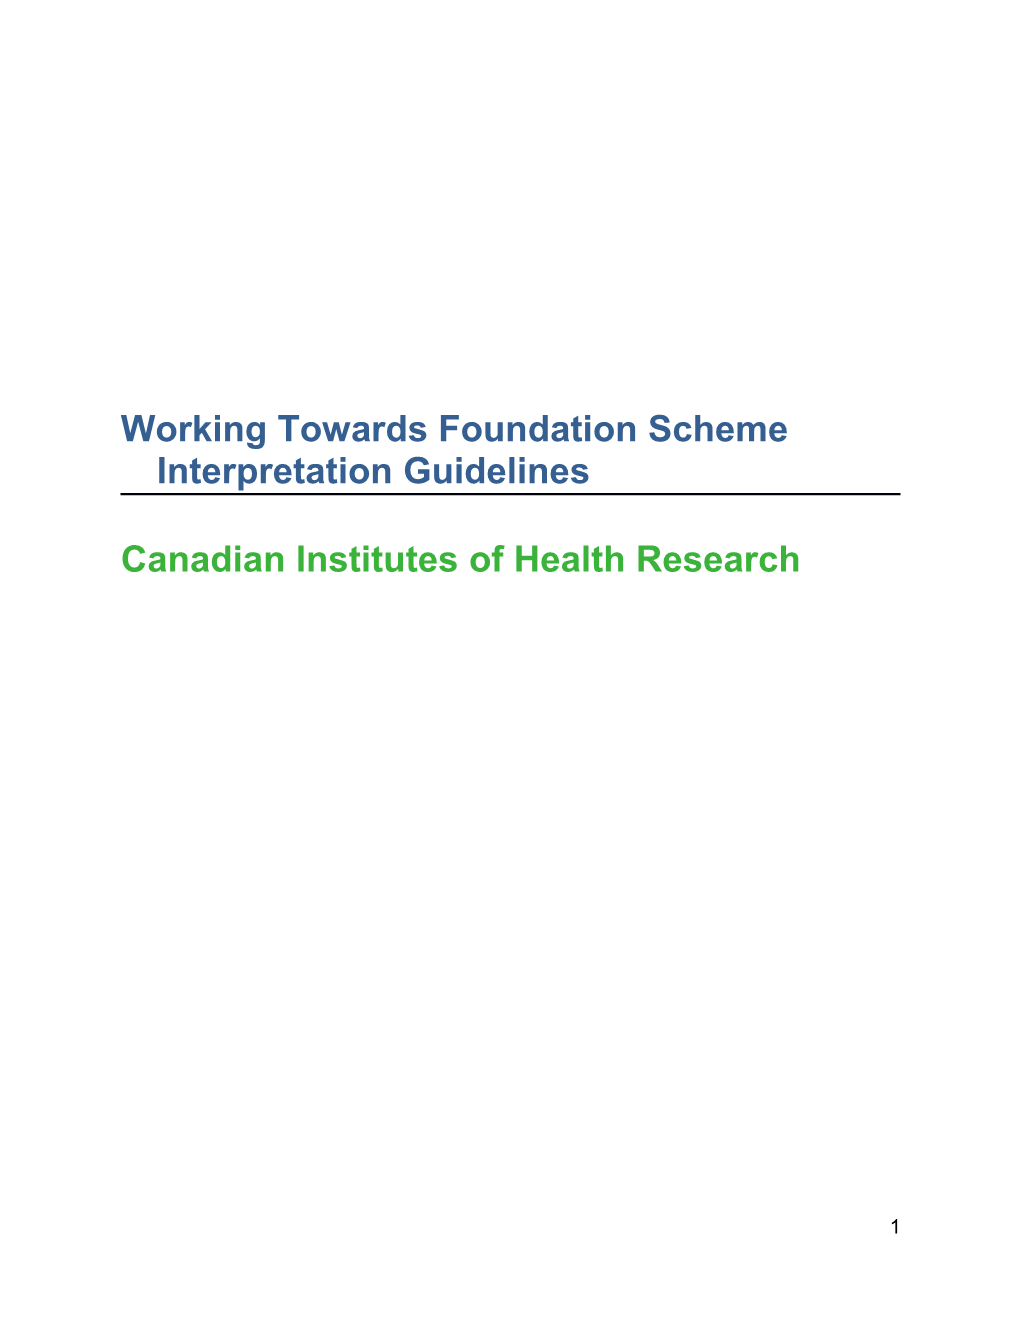 Working Towards Foundation Grant Interpretation Guidelines